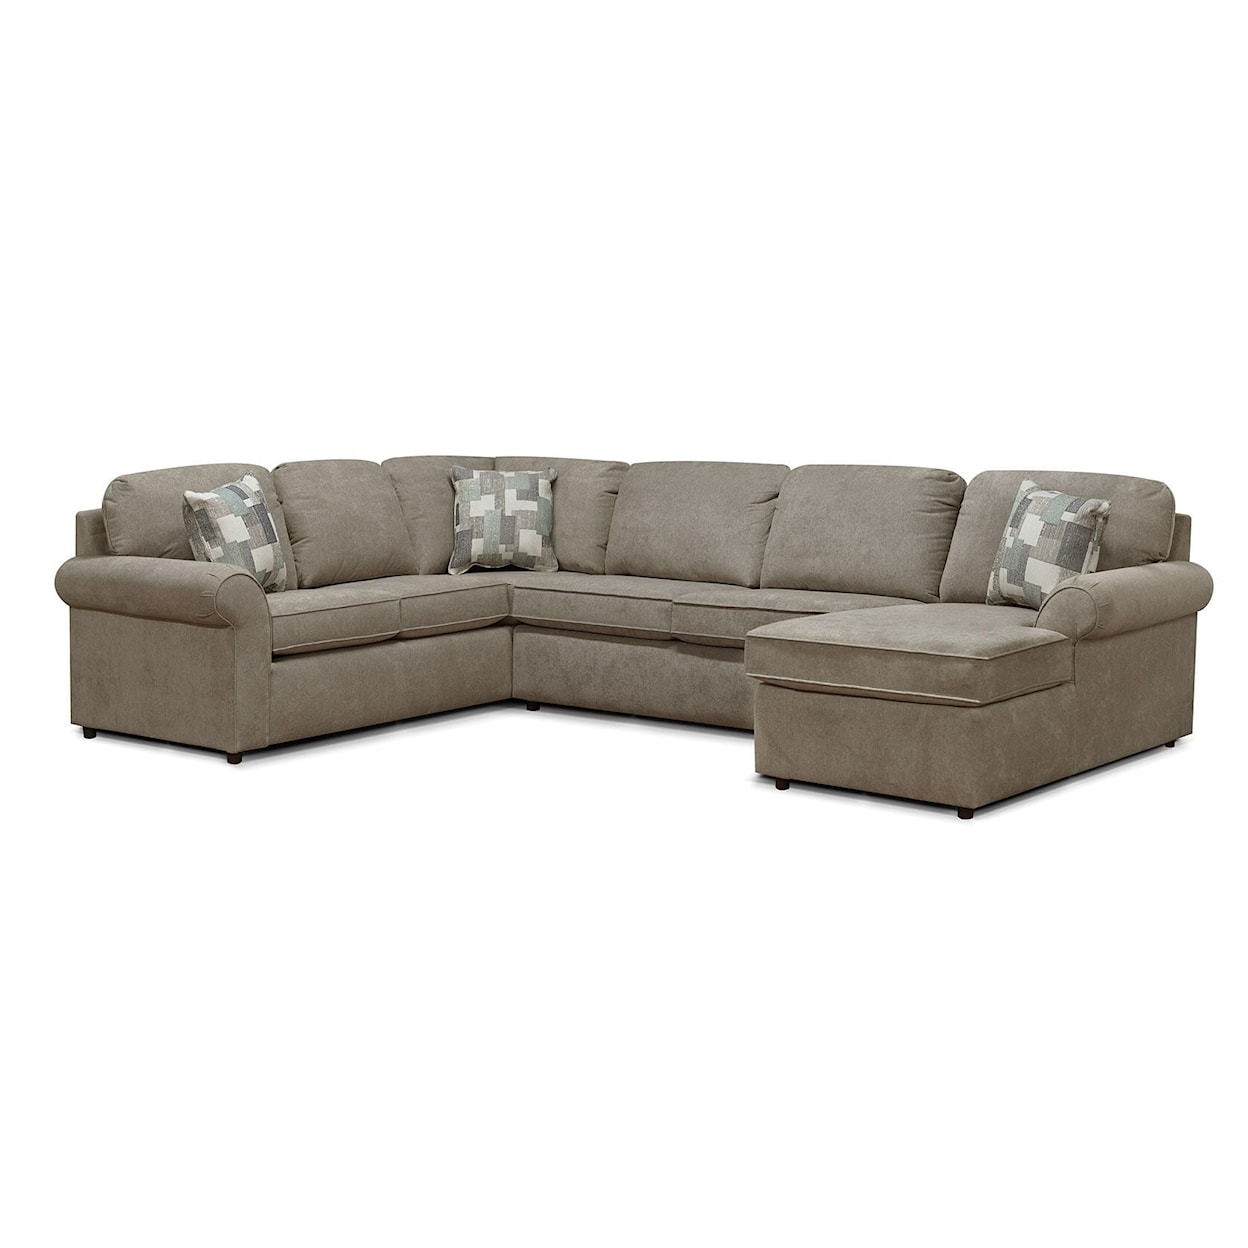 Dimensions 2400/X Series - Malibu 3-Piece Sectional Chaise Sofa